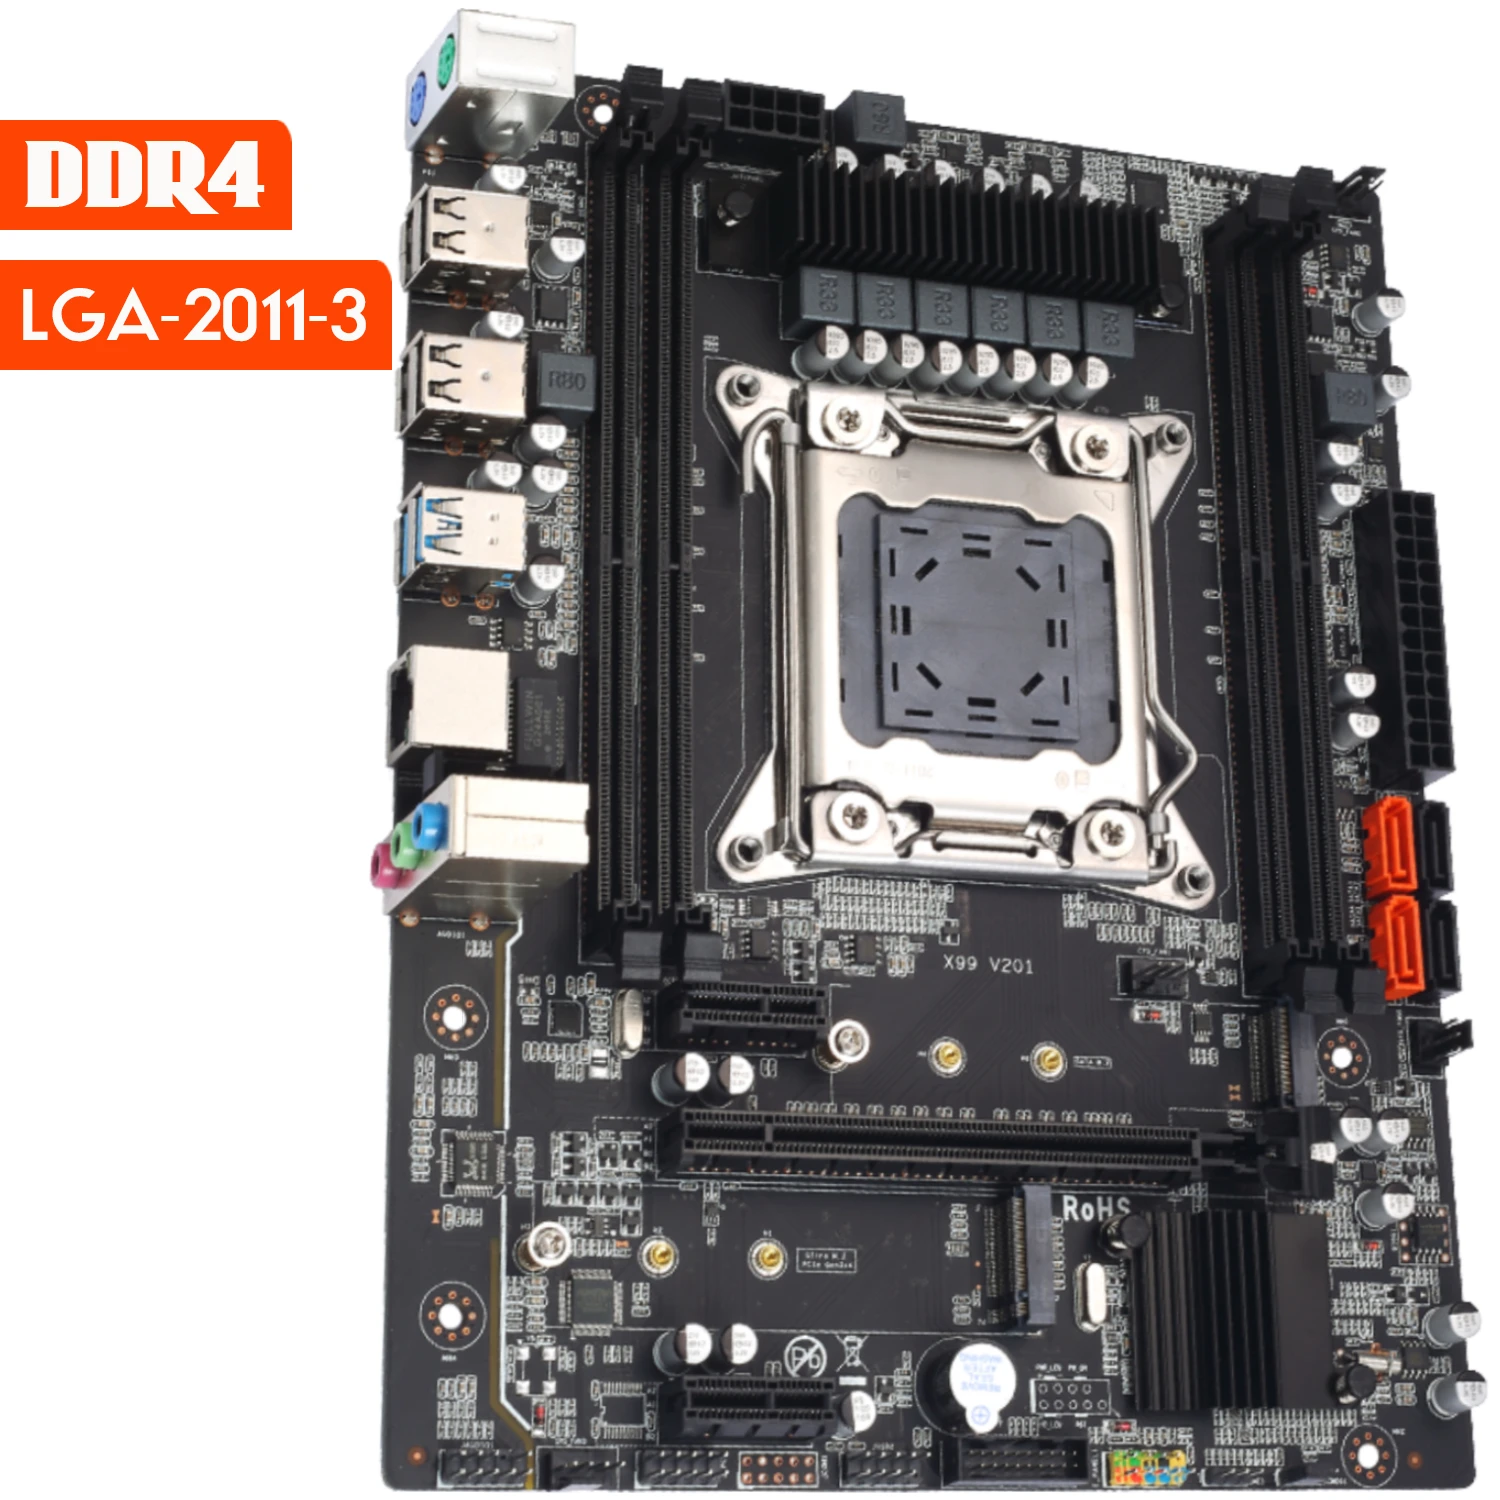 Atermiter X99 Motherboard Lga2011-3 Usb3.0 Nvme M.2 Ssd Support Ddr4 Reg Ecc Memory And Xeon E5 V3 V4 Processor - Motherboards - AliExpress